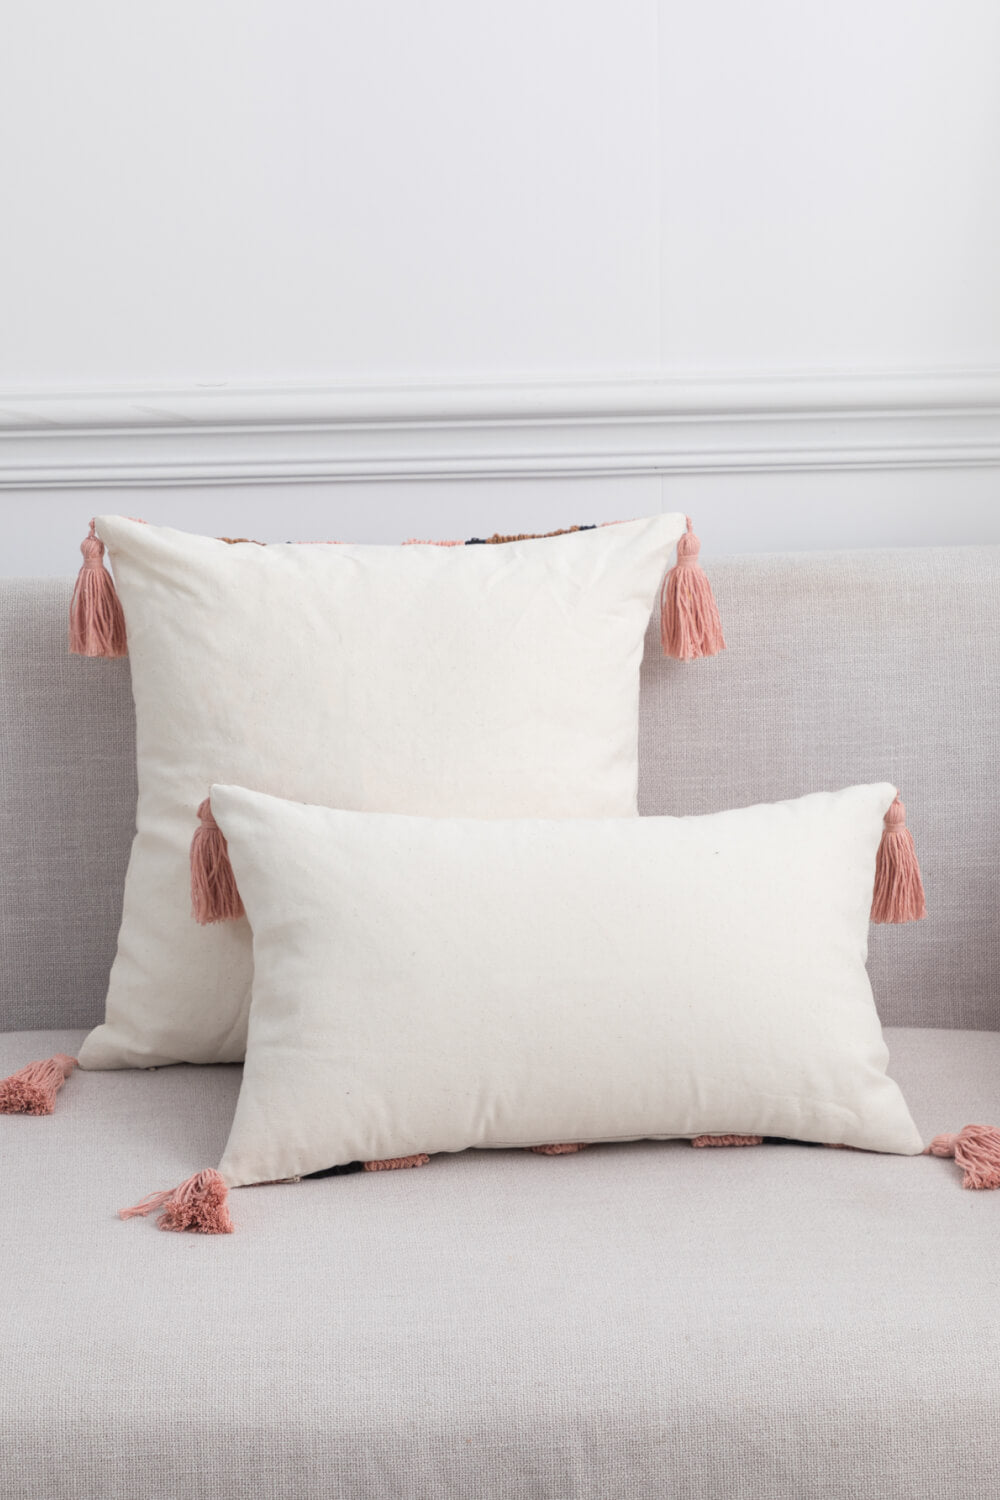 HOME—Decorative Throw Pillow Case--Geometric Graphic Tassel